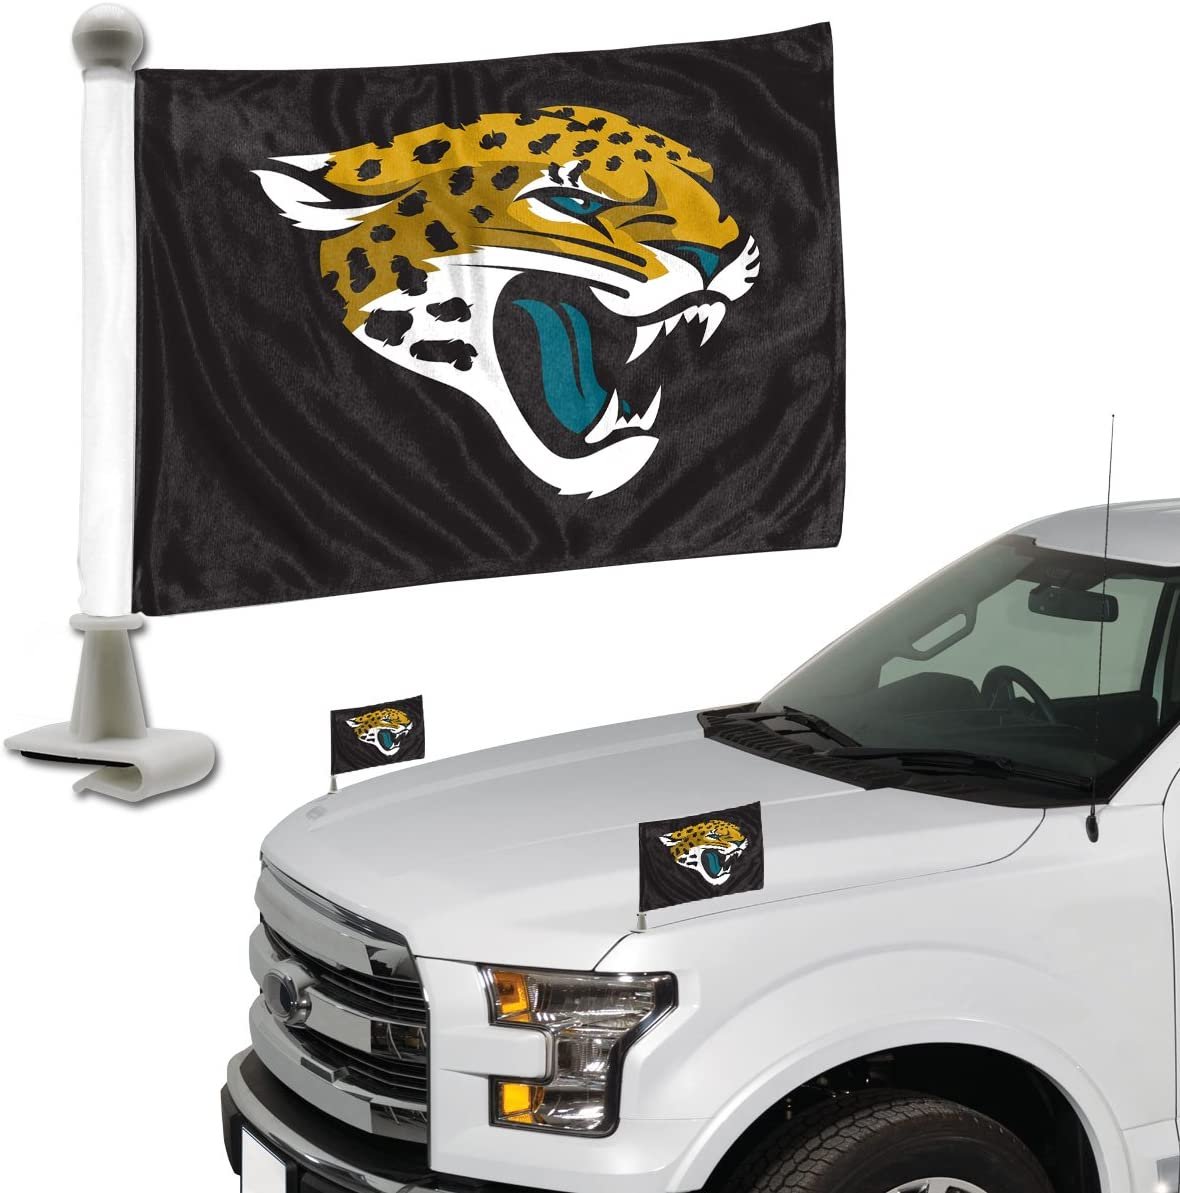 FANMATS ProMark NFL Jacksonville Jaguars Flag Set 2-Piece Ambassador Style, Team Color, One Size (8162089914)